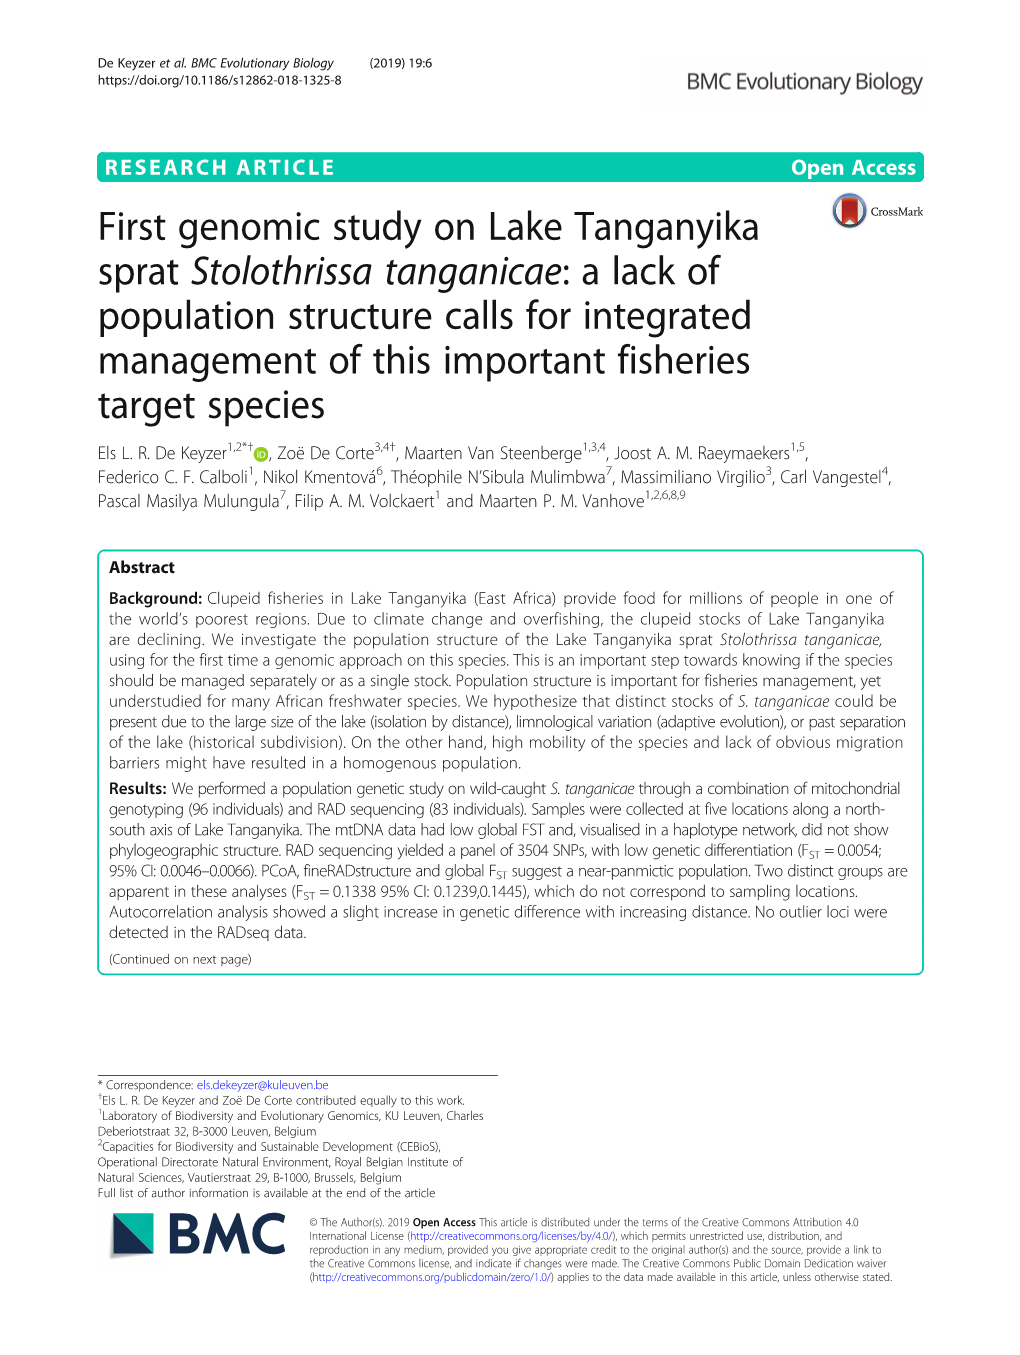 First Genomic Study on Lake Tanganyika Sprat Stolothrissa